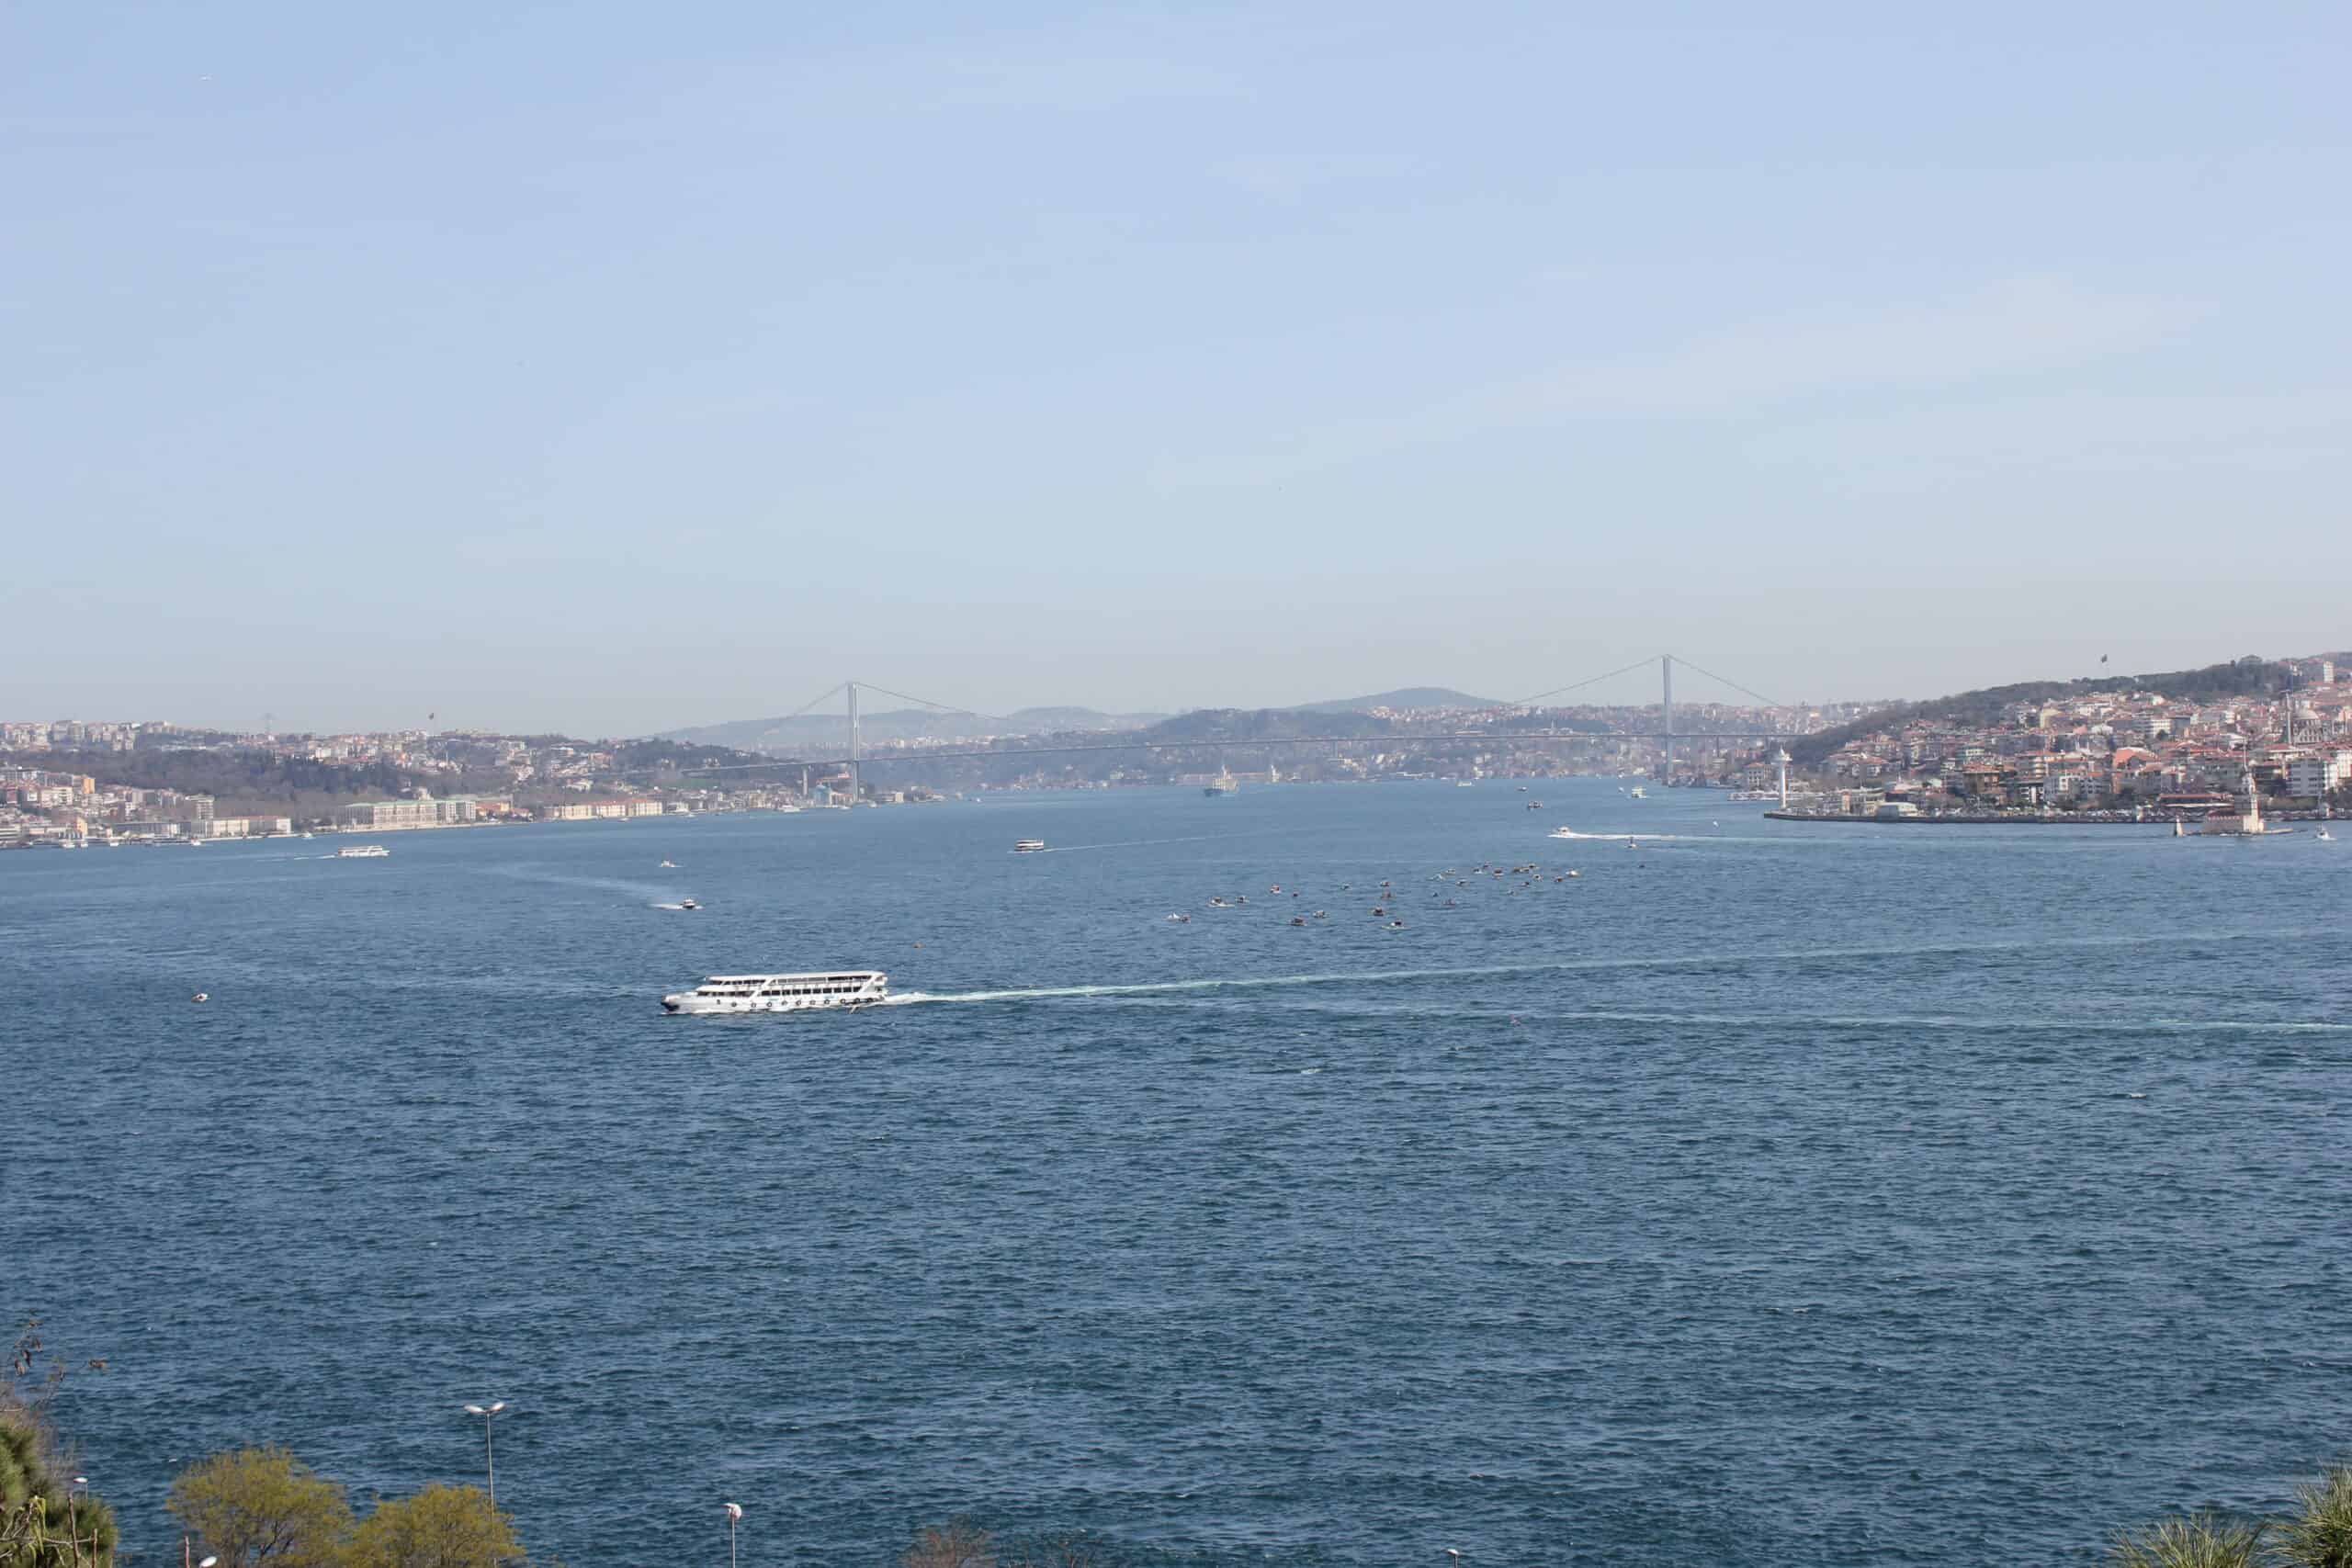 Istanbul and the Bosphorus Strait